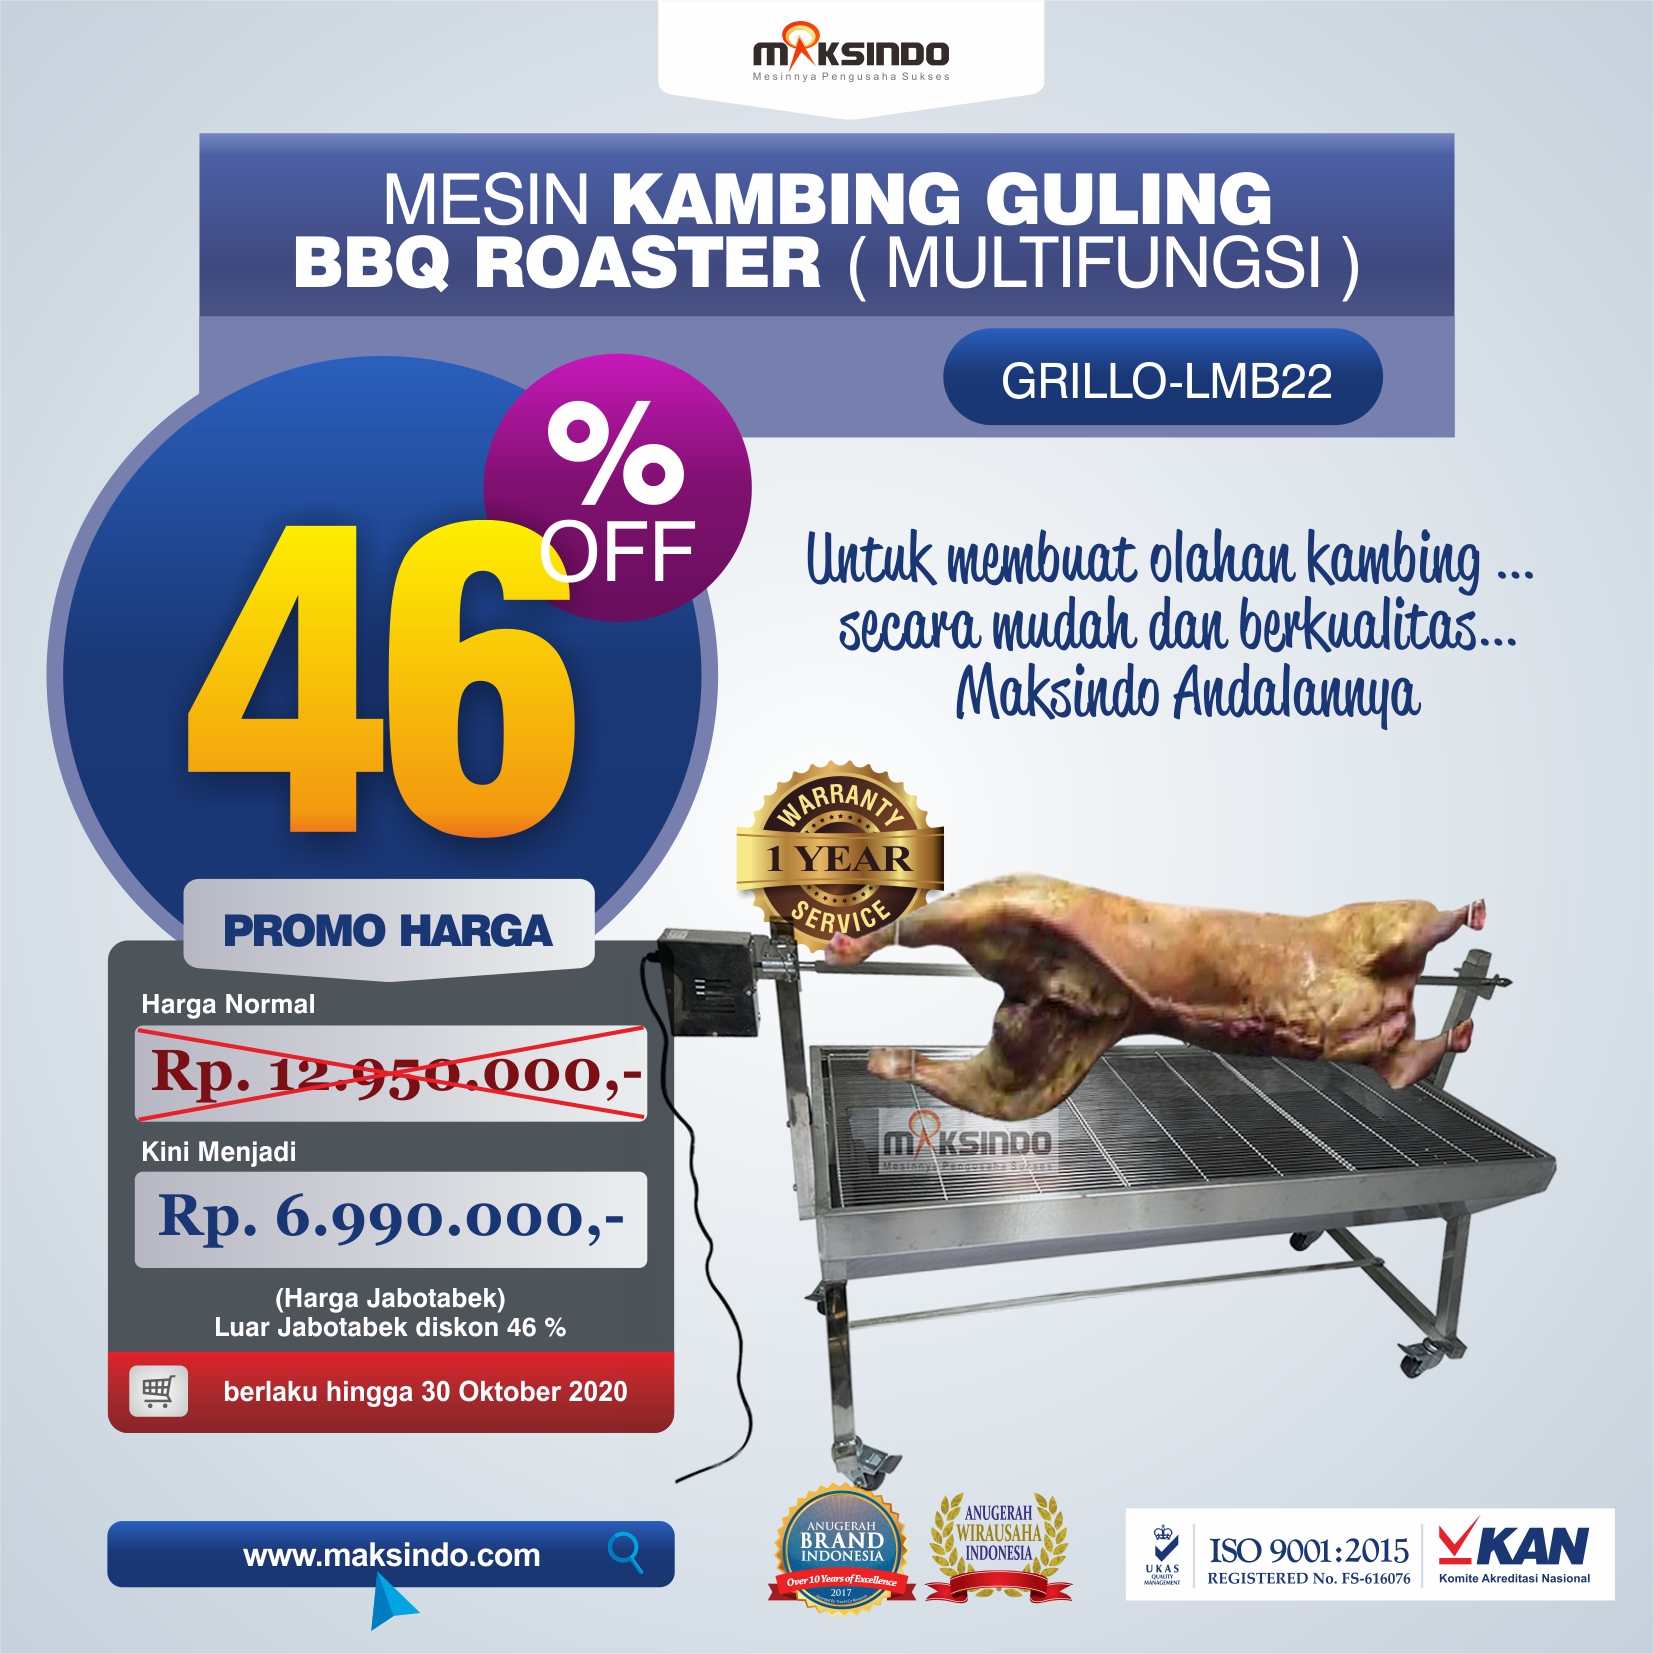 Jual Mesin Kambing Guling BBQ Roaster (GRILLO-LMB22) di Jakarta